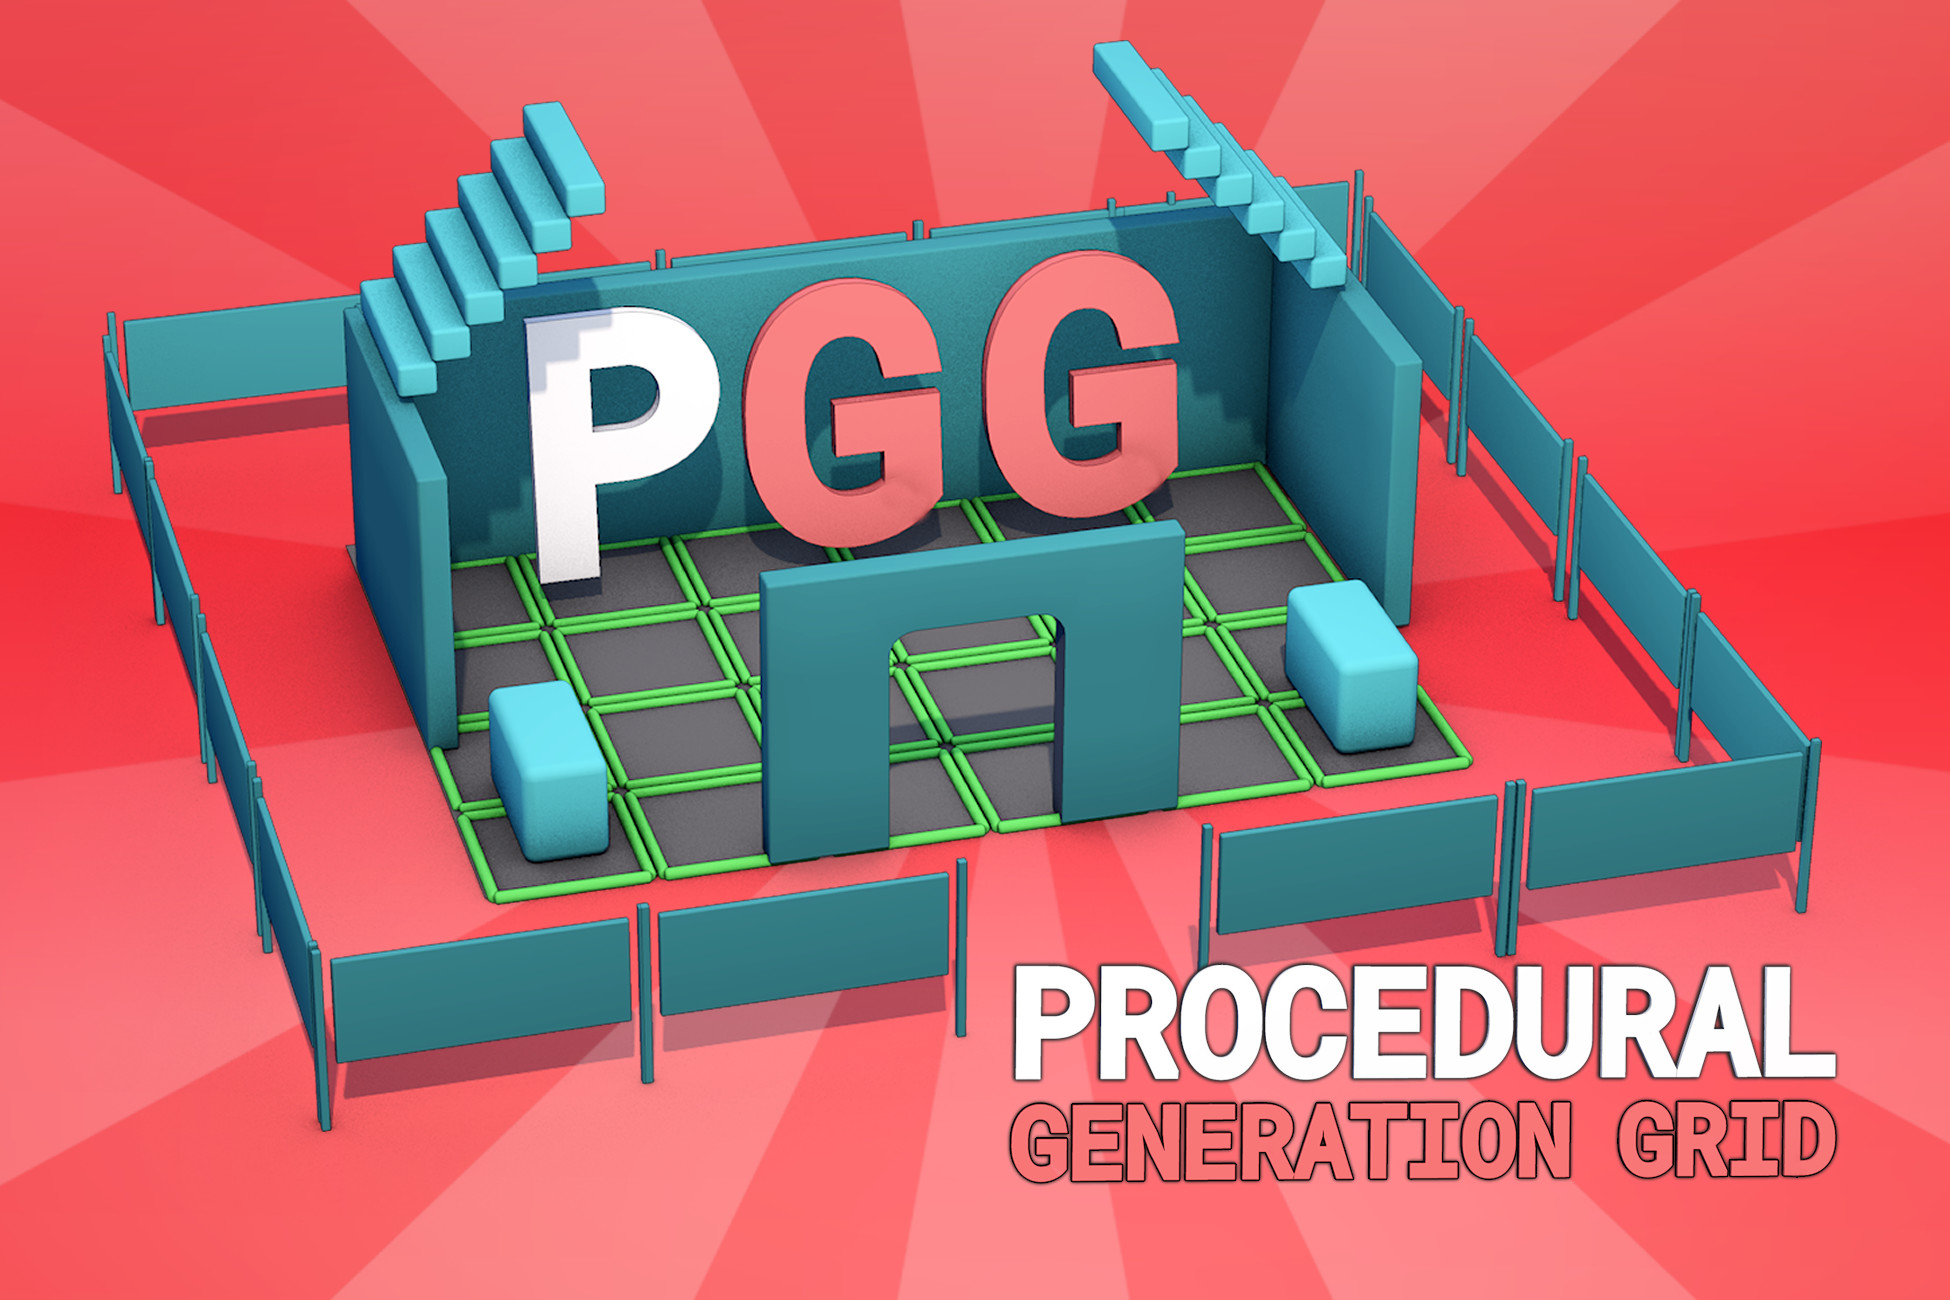 Procedural Generation Grid Asset incelemesi